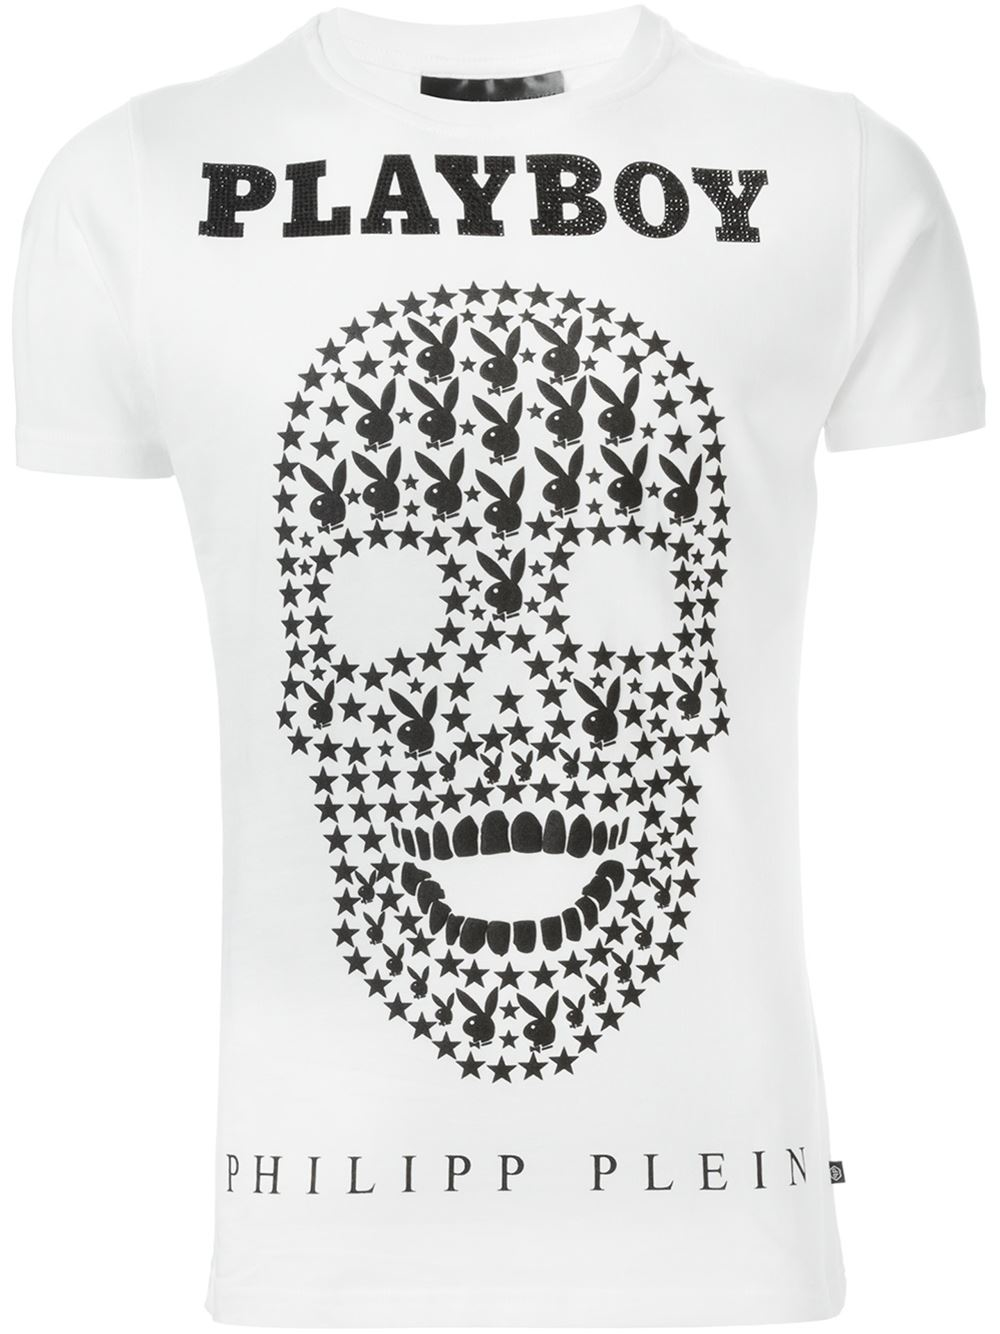 Philipp Plein T Shirt Playboy Store - deportesinc.com 1688300596